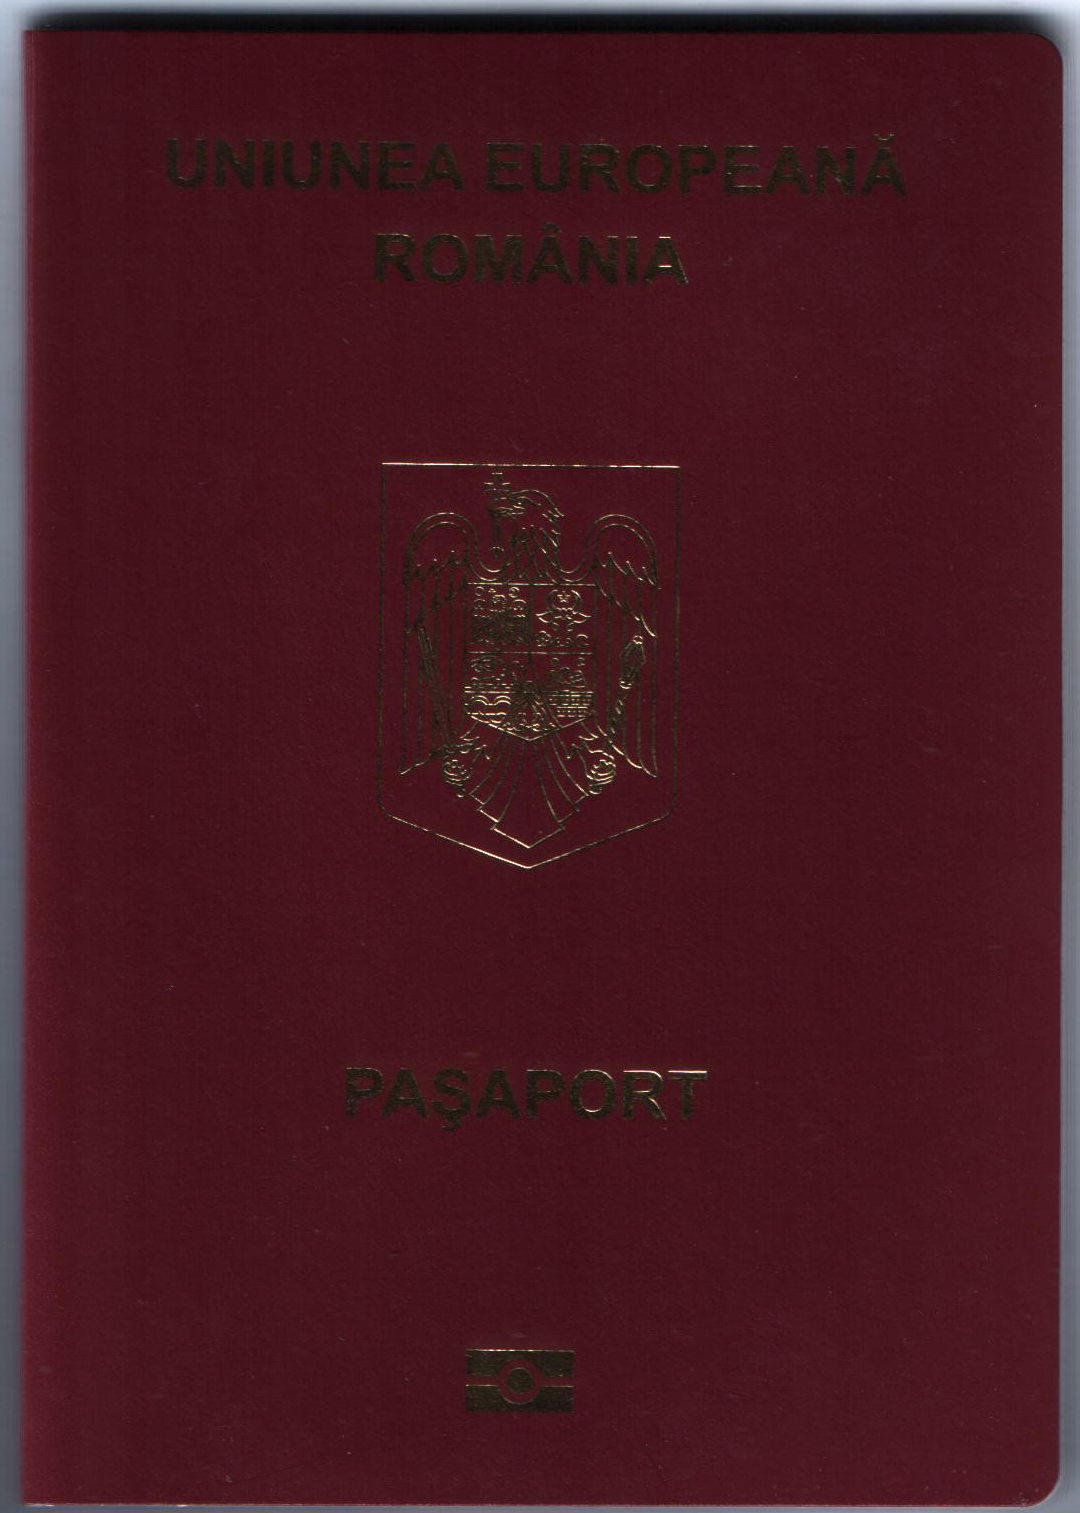 Passport PNG pngteam.com